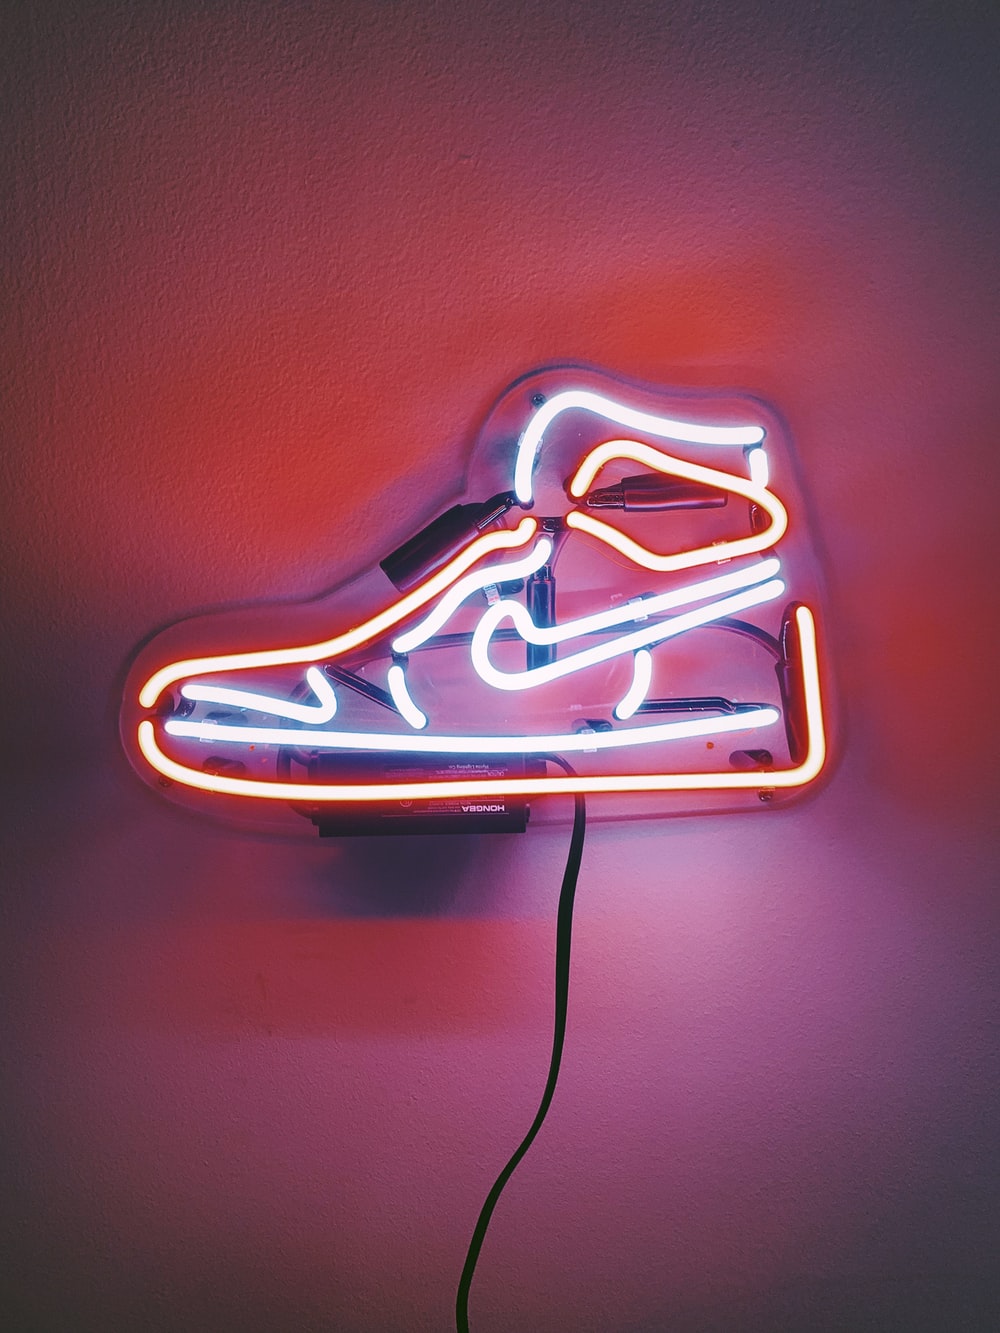 Neon Jordan Retro Shoe Wallpapers